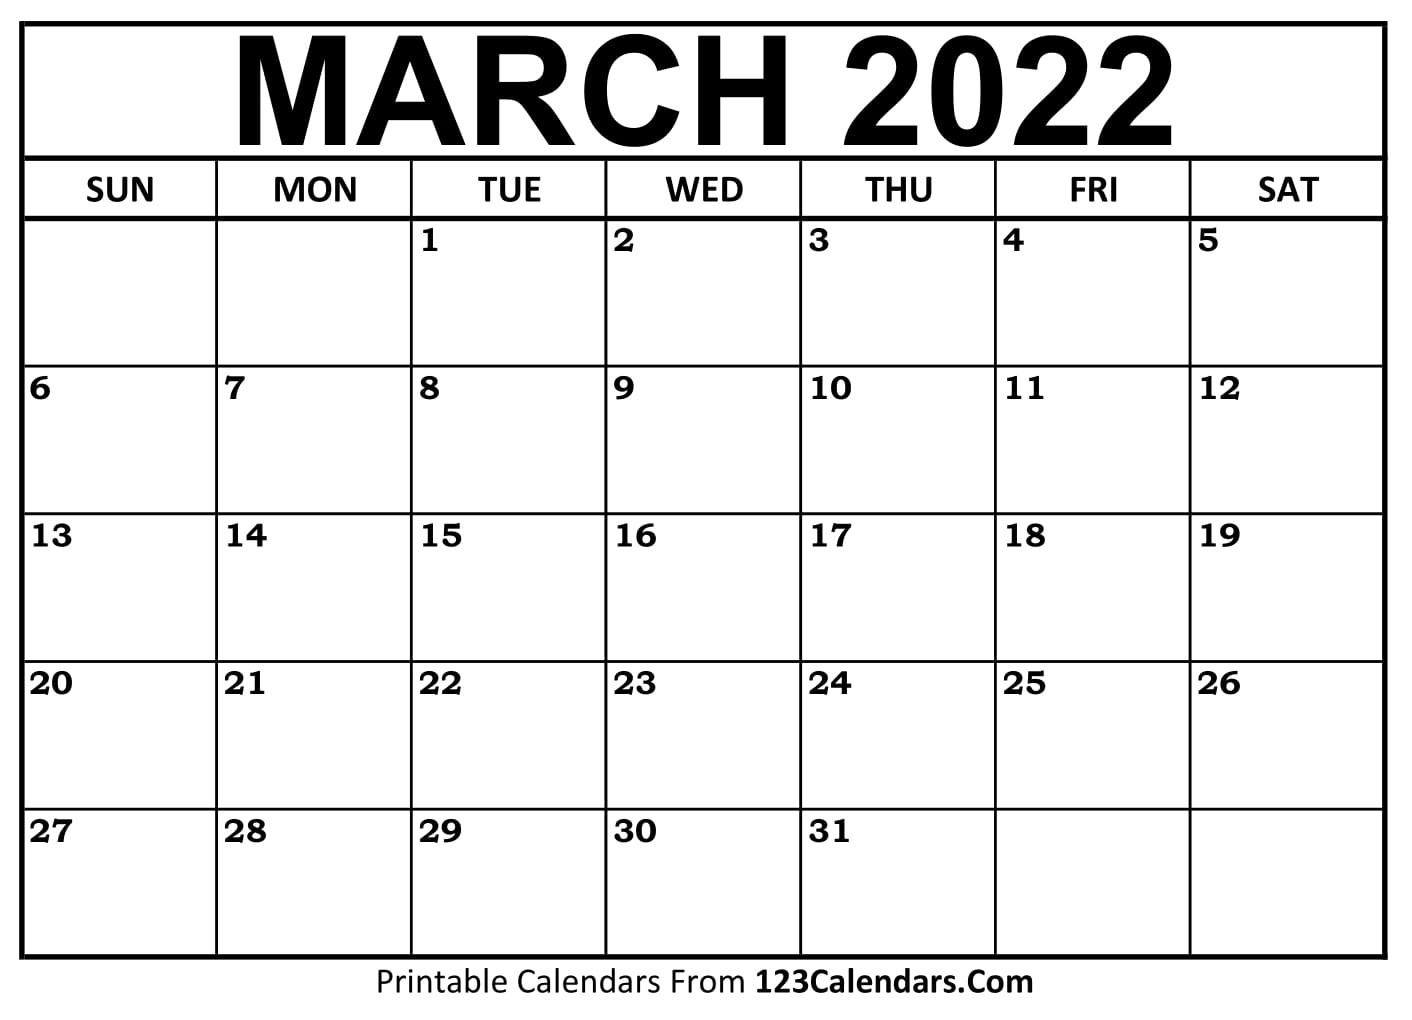 March 2022 Monthly Calendar Printable March 2022 Calendar Templates - 123Calendars.com